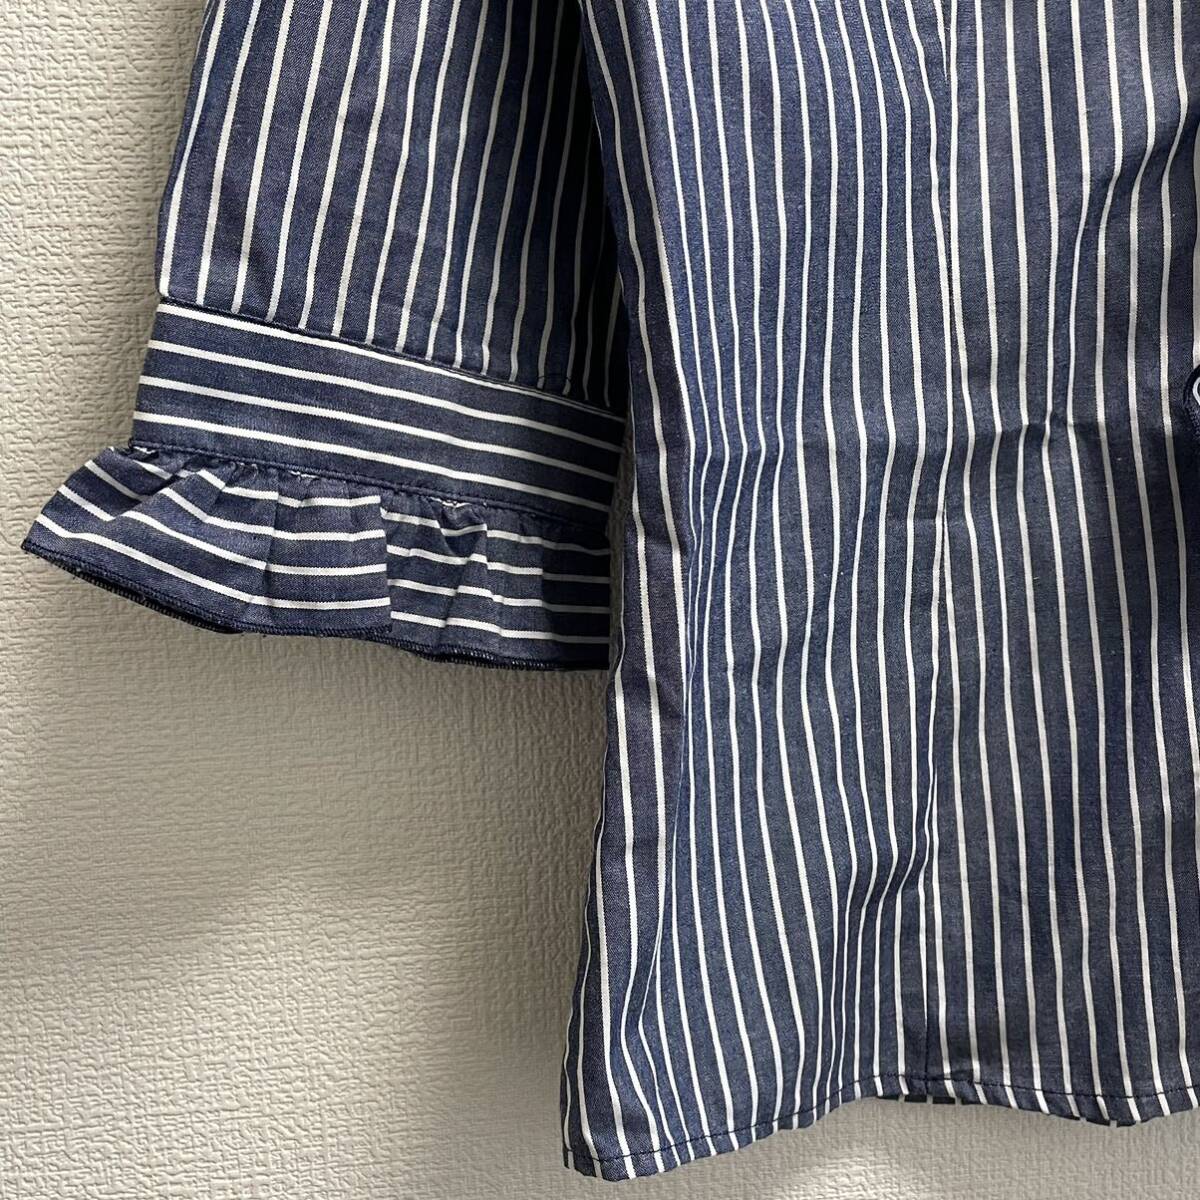 NARACAMICIE Nara Camicie lady's frill 5 minute sleeve shirt size 1 stripe navy white 